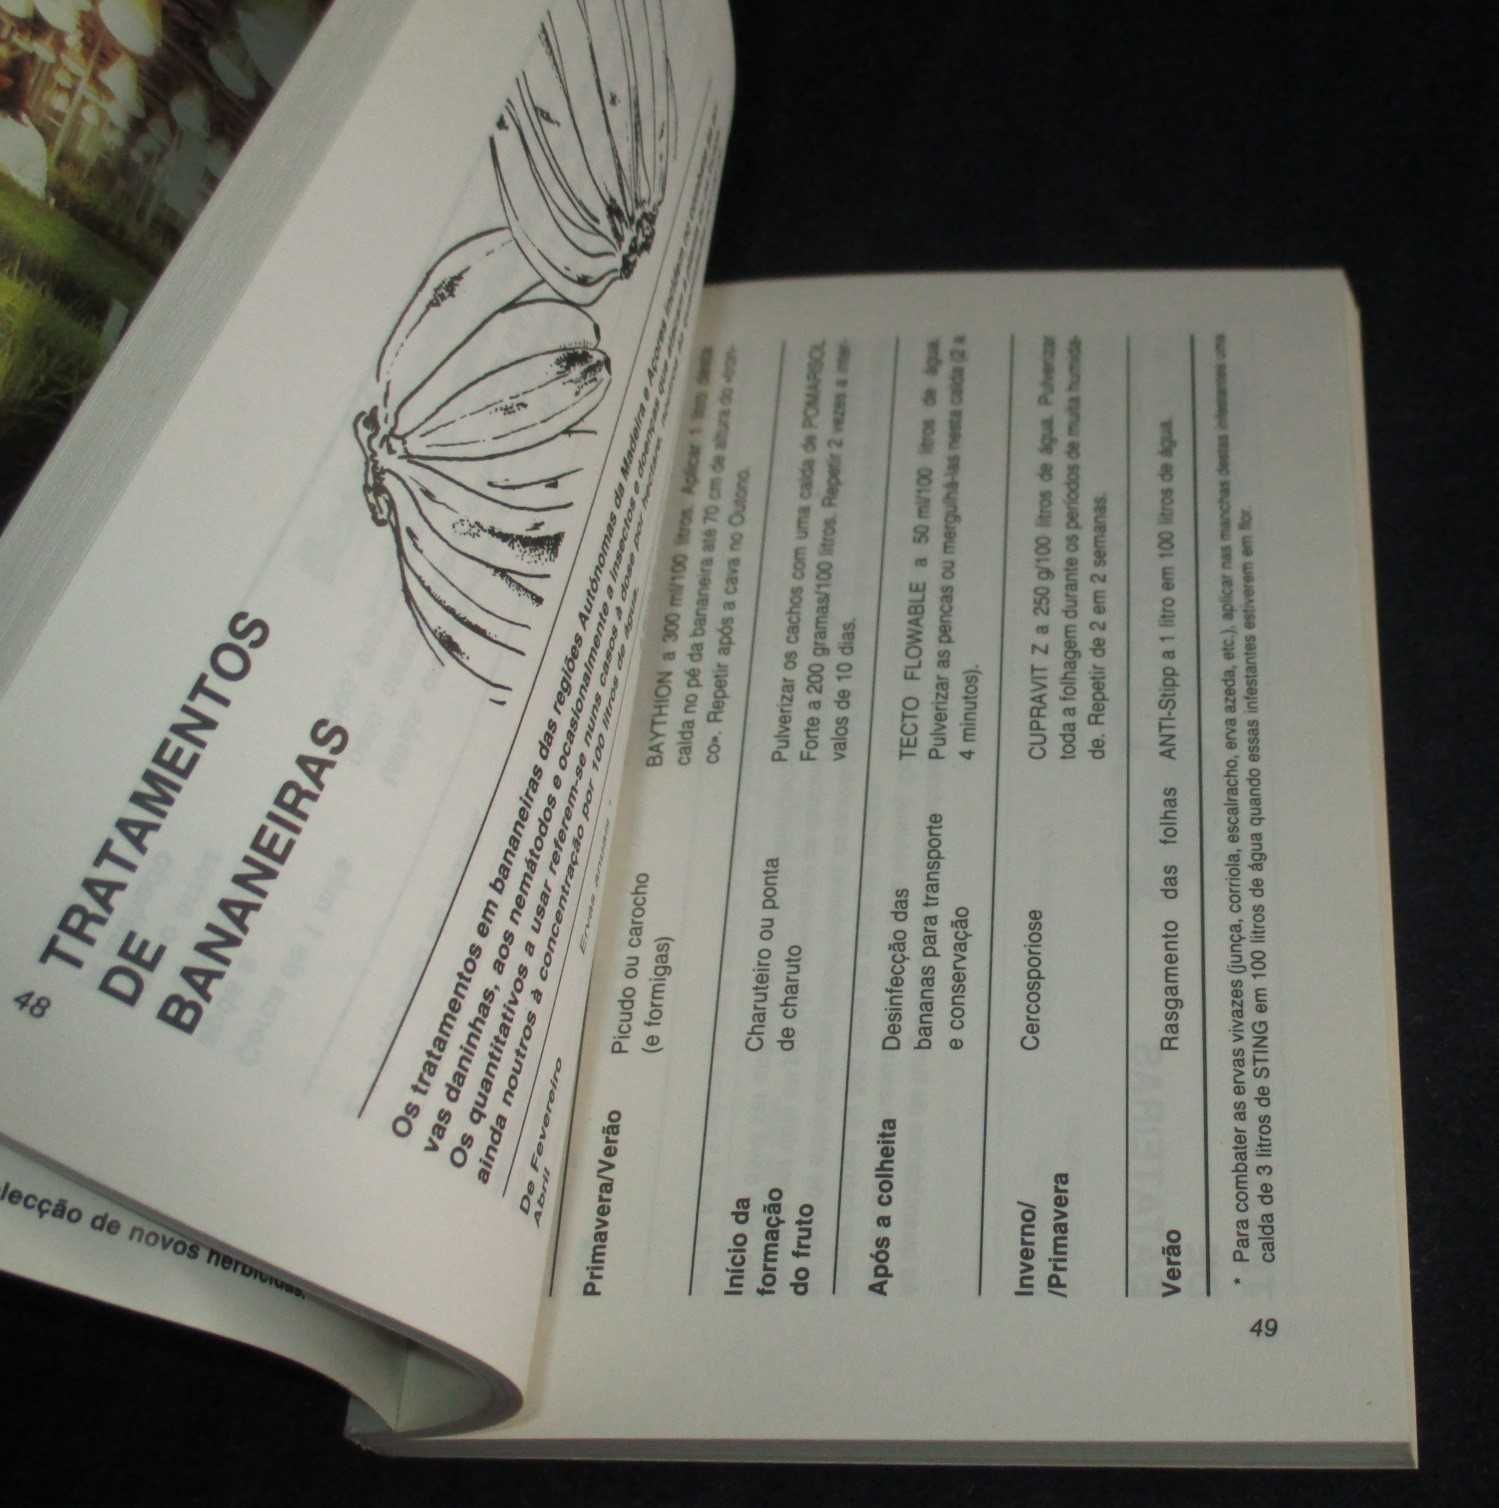 Livro Manual Técnico Produtos Agroquímicos Bayer